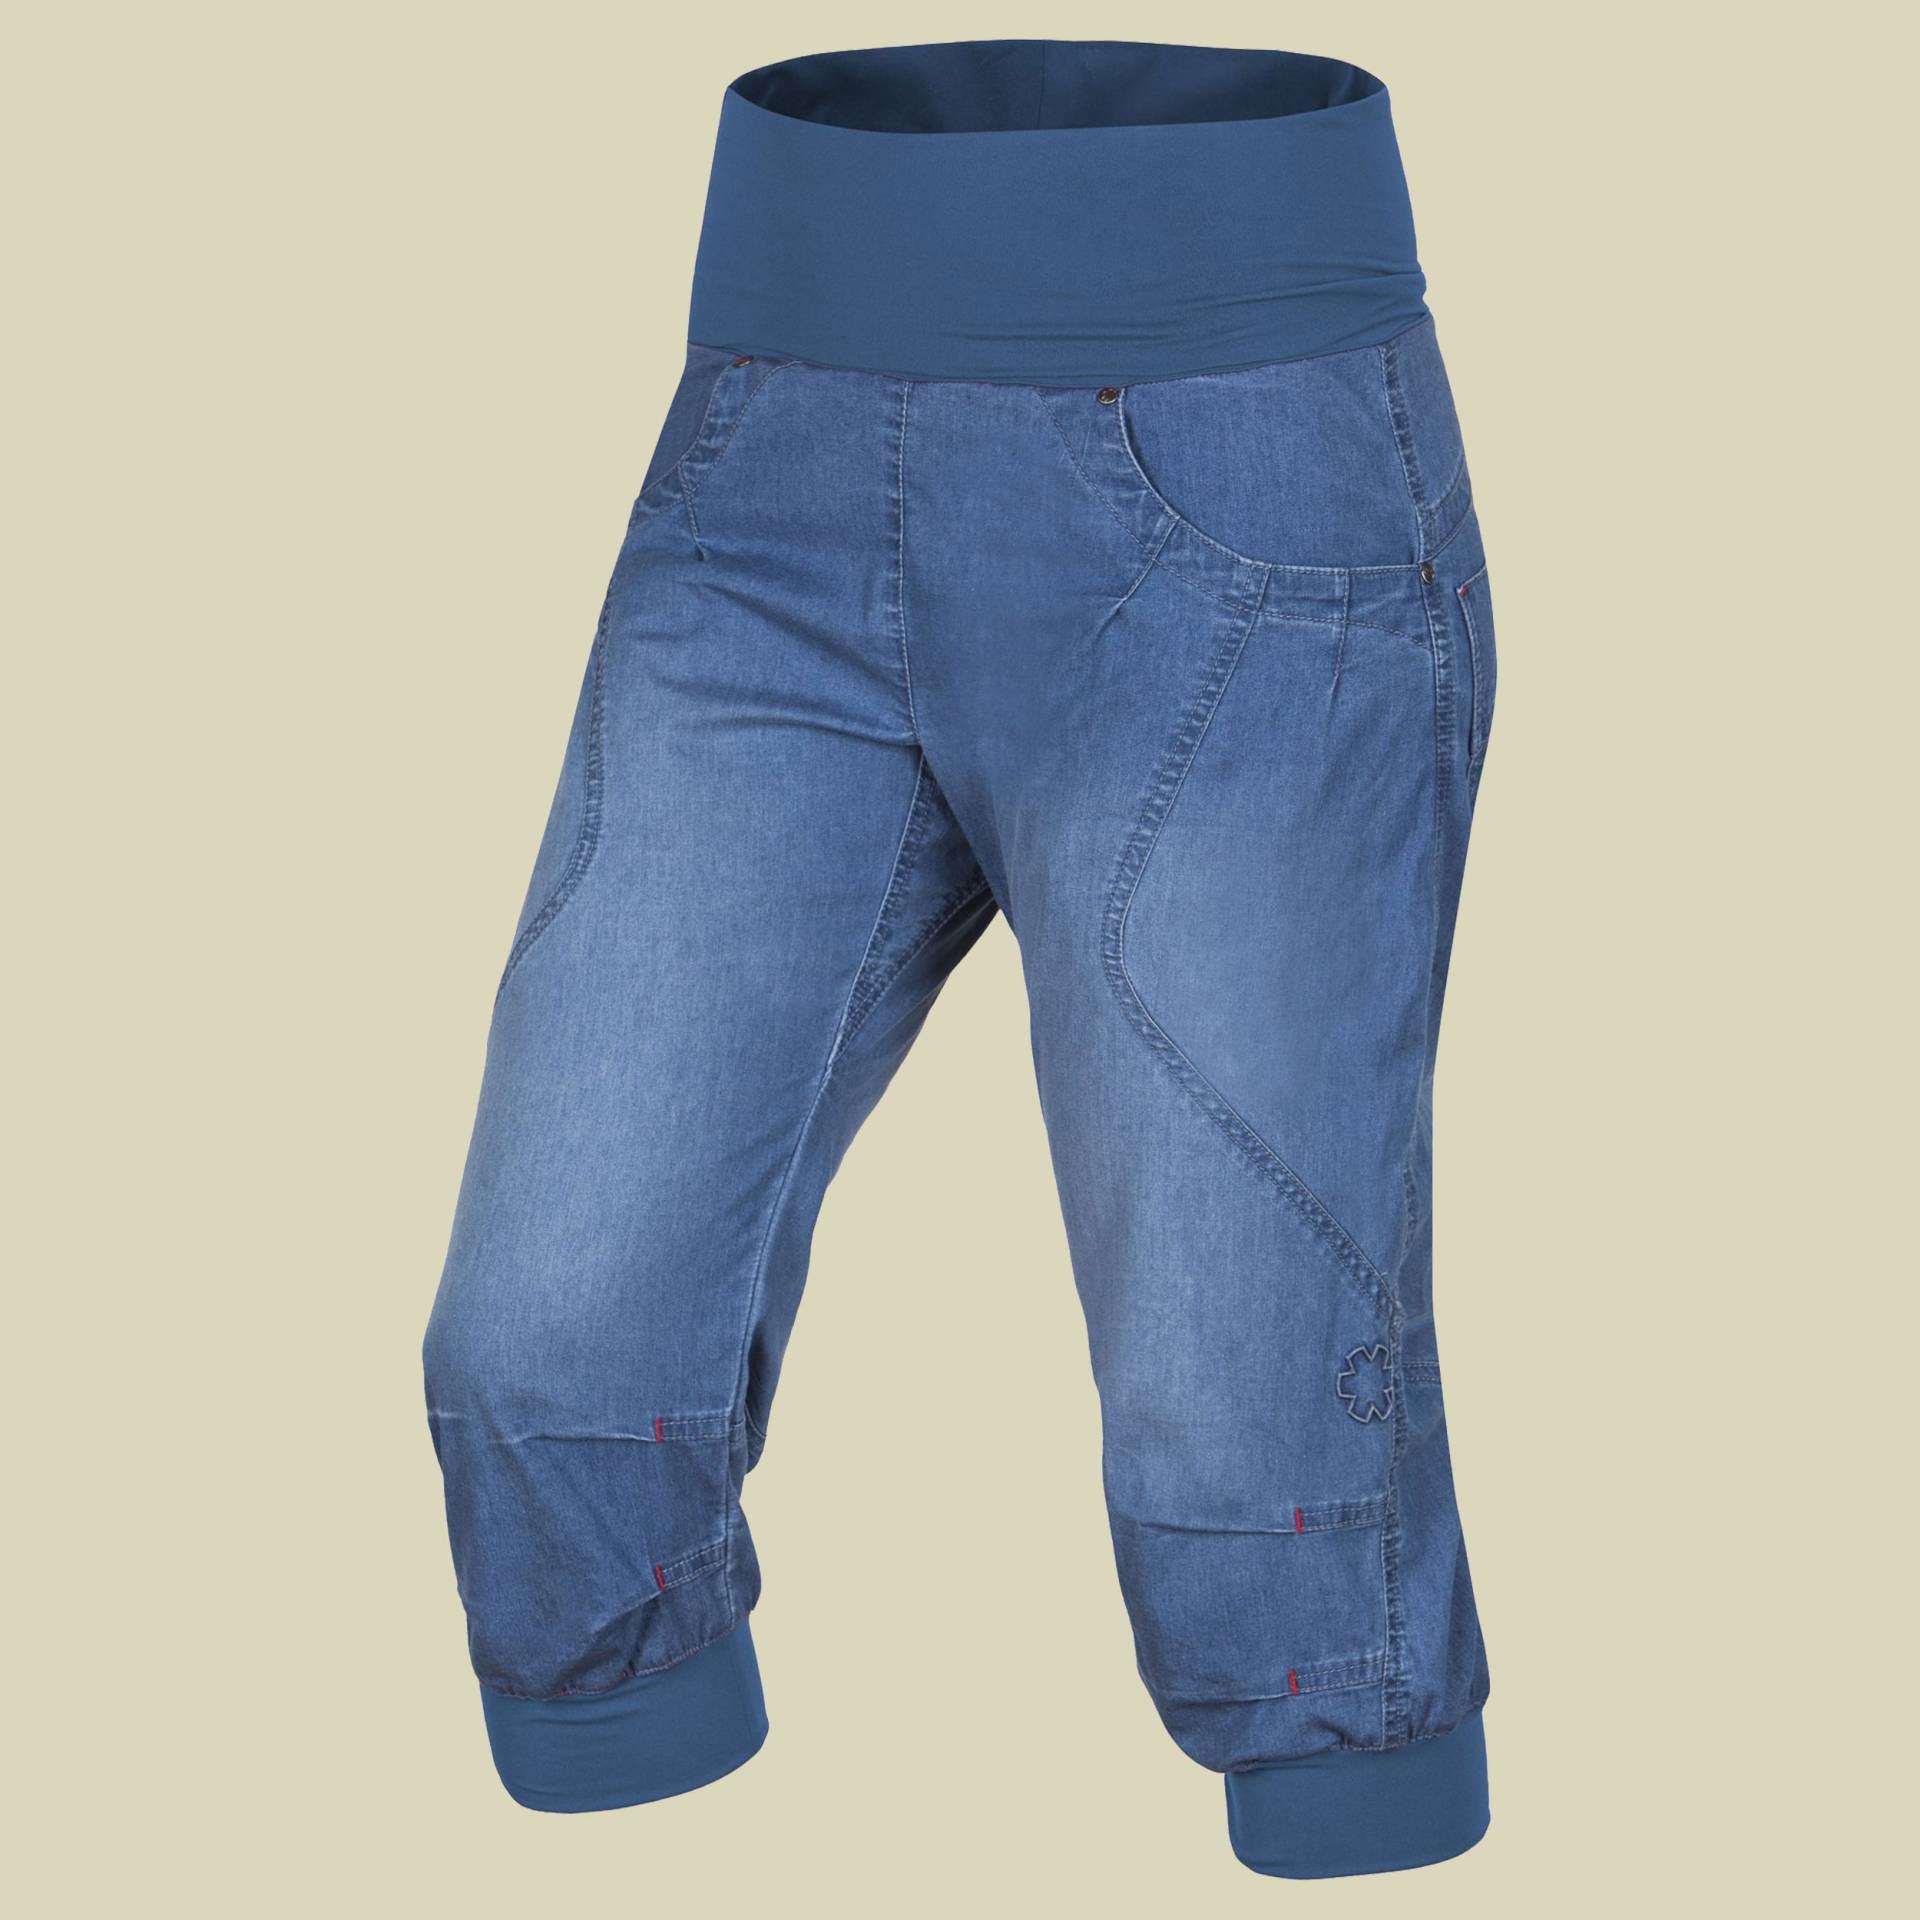 Noya Shorts Jeans Women Größe L  Farbe middle blue von Ocun